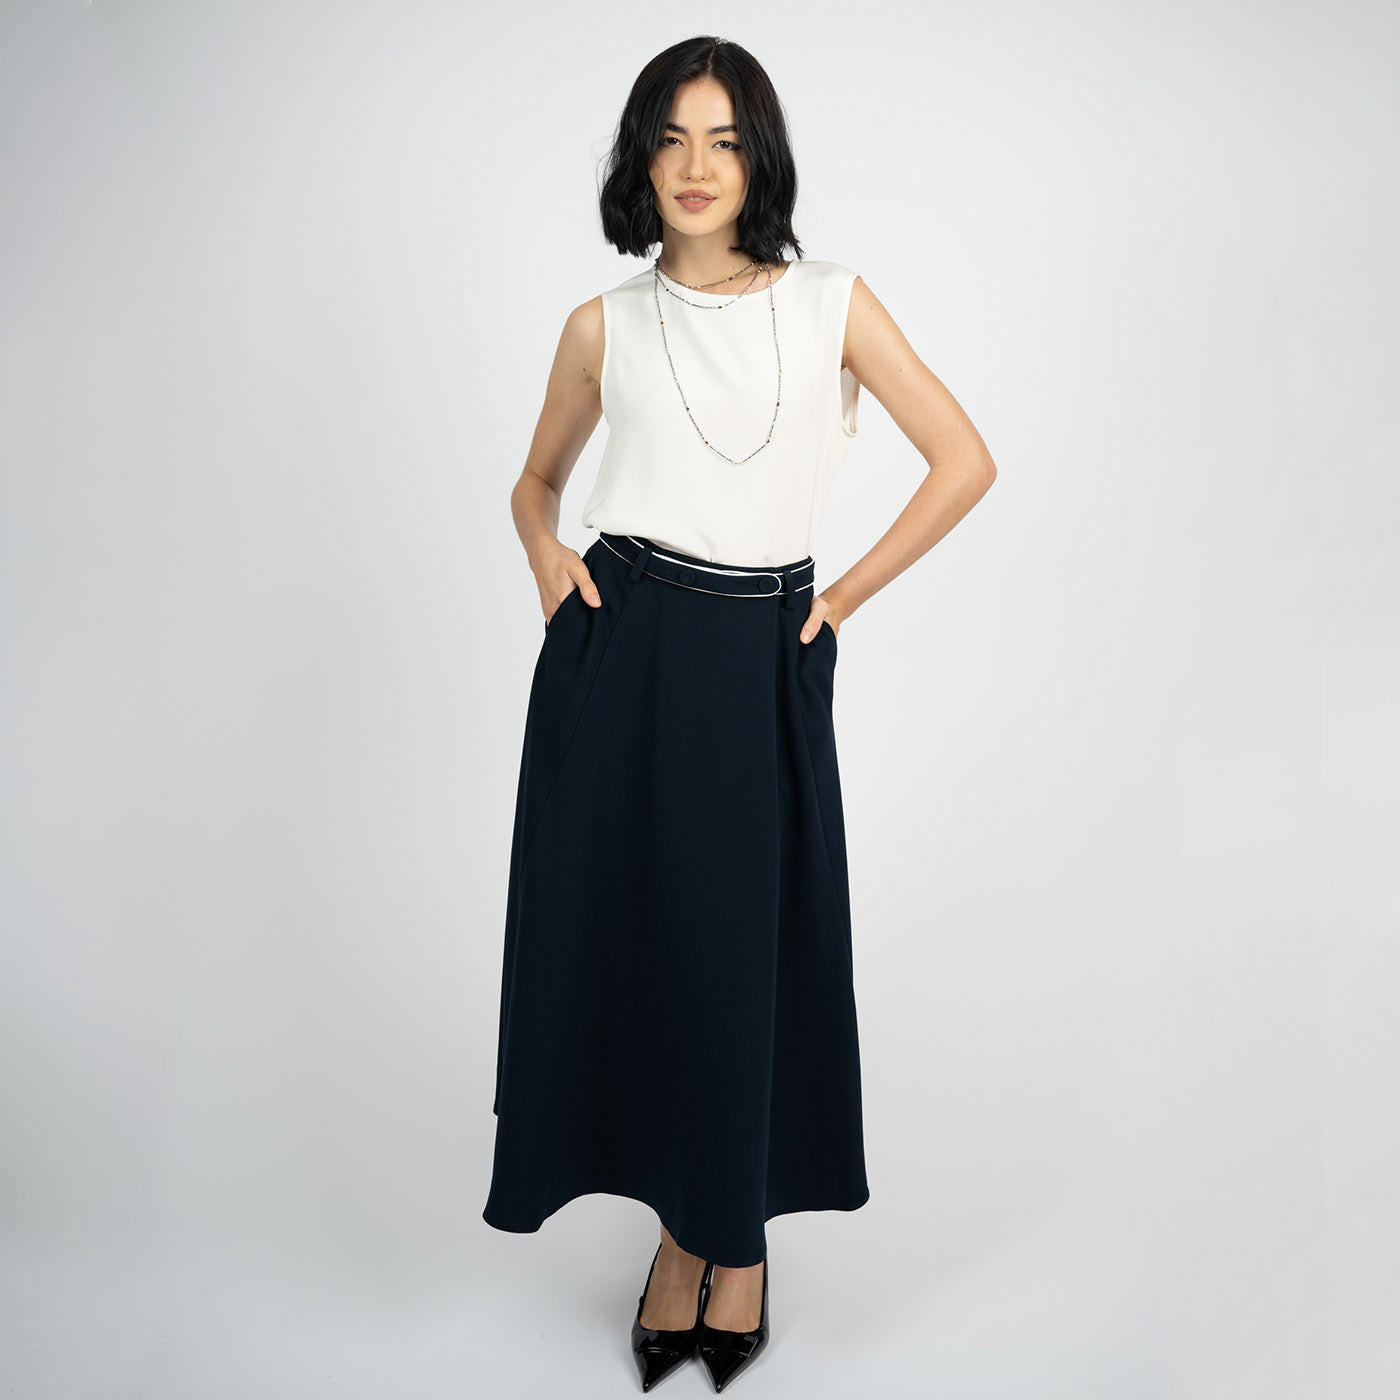 Discover Stylish Lauren Acetate Skirts - Gosia Orlowska